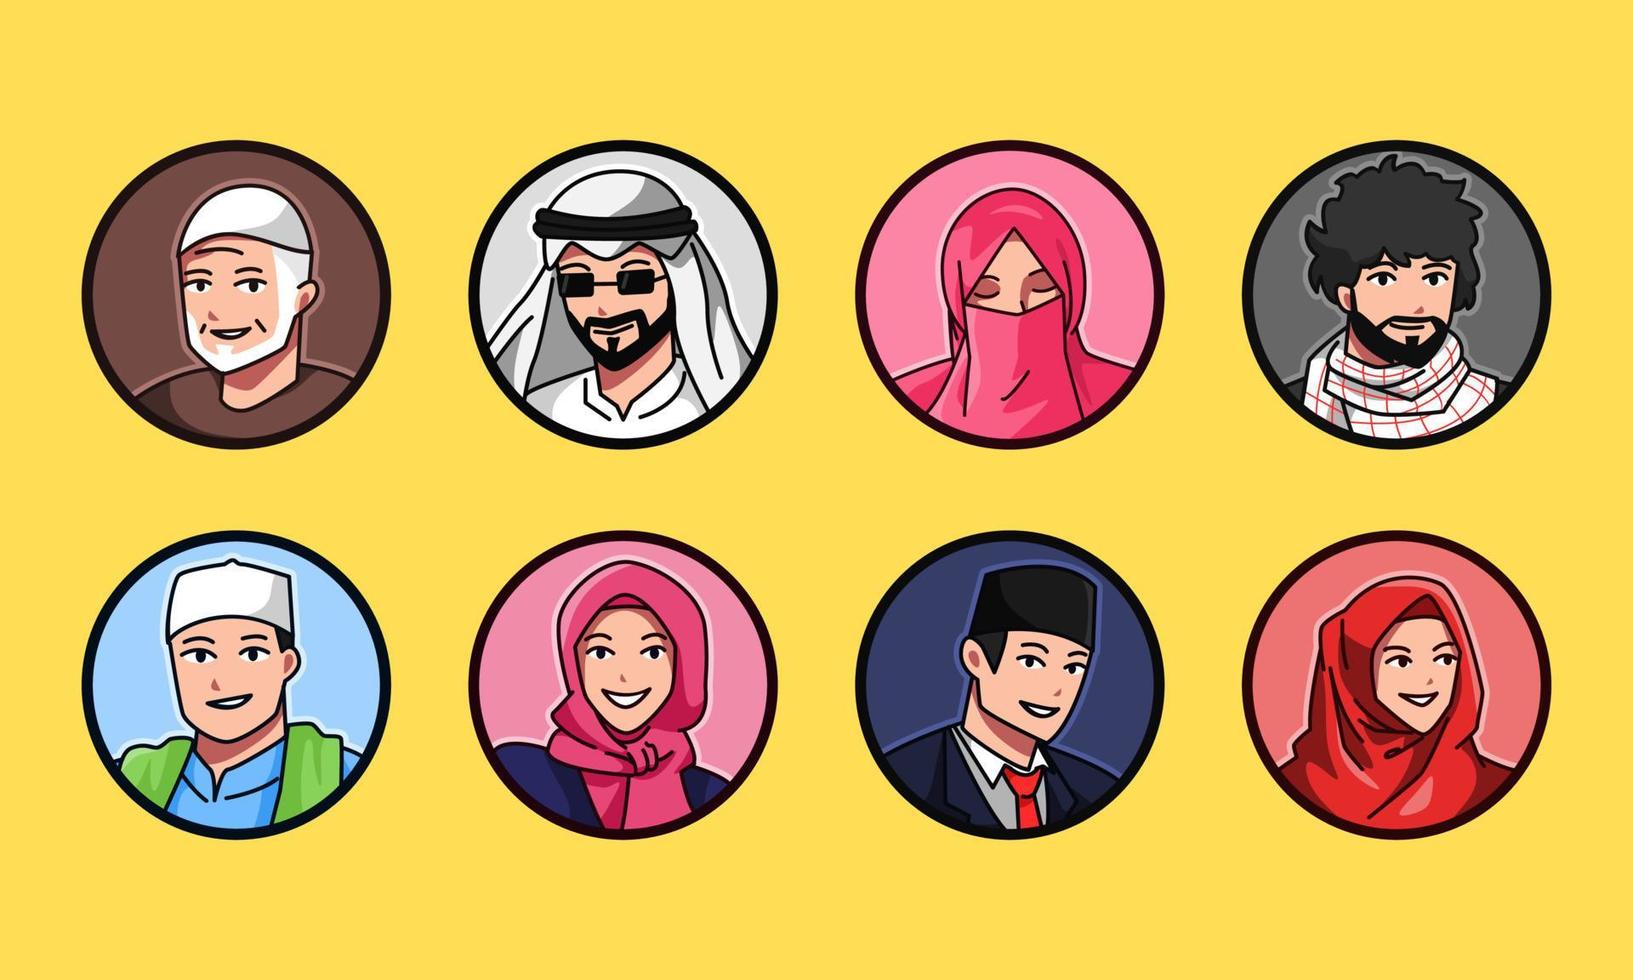 reeks avatar portretten van moslim karakters. kaffiyeh, moslim pet, hijaab, nikab. ronde, cirkel avatar icoon voor sociaal media, gebruiker profiel, website, app. lijn tekenfilm stijl. vector illustratie.